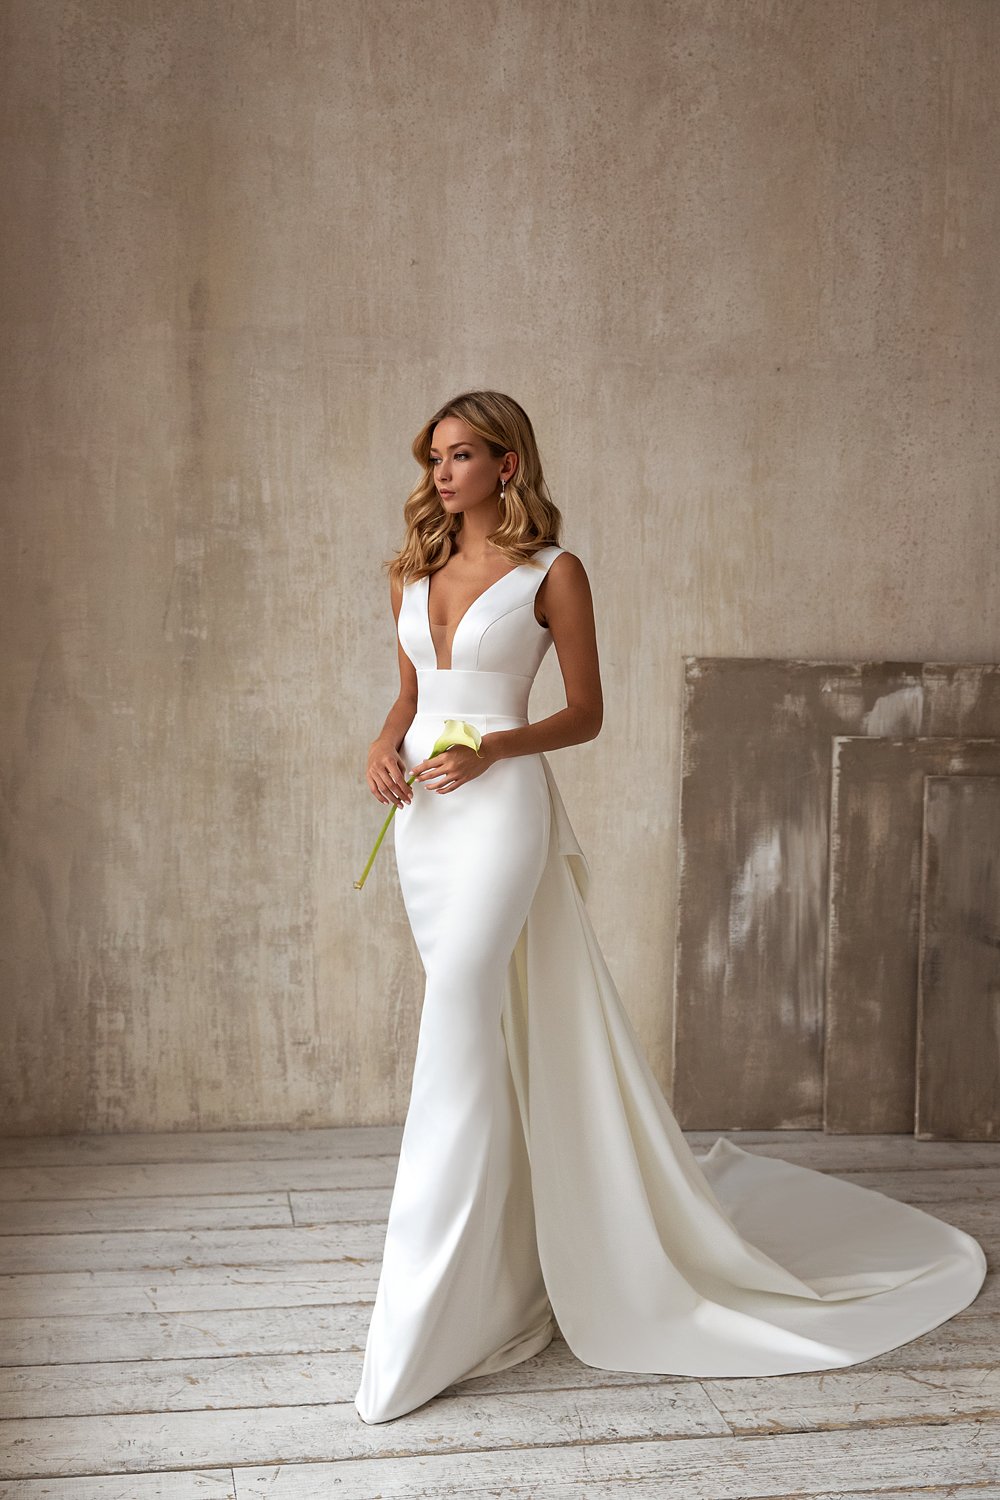 blanc-de-blanc-bridal-boutique-pittsburgh-cleveland-dress-wedding-gown-EVA-LENDEL-aretta_Debora.jpeg